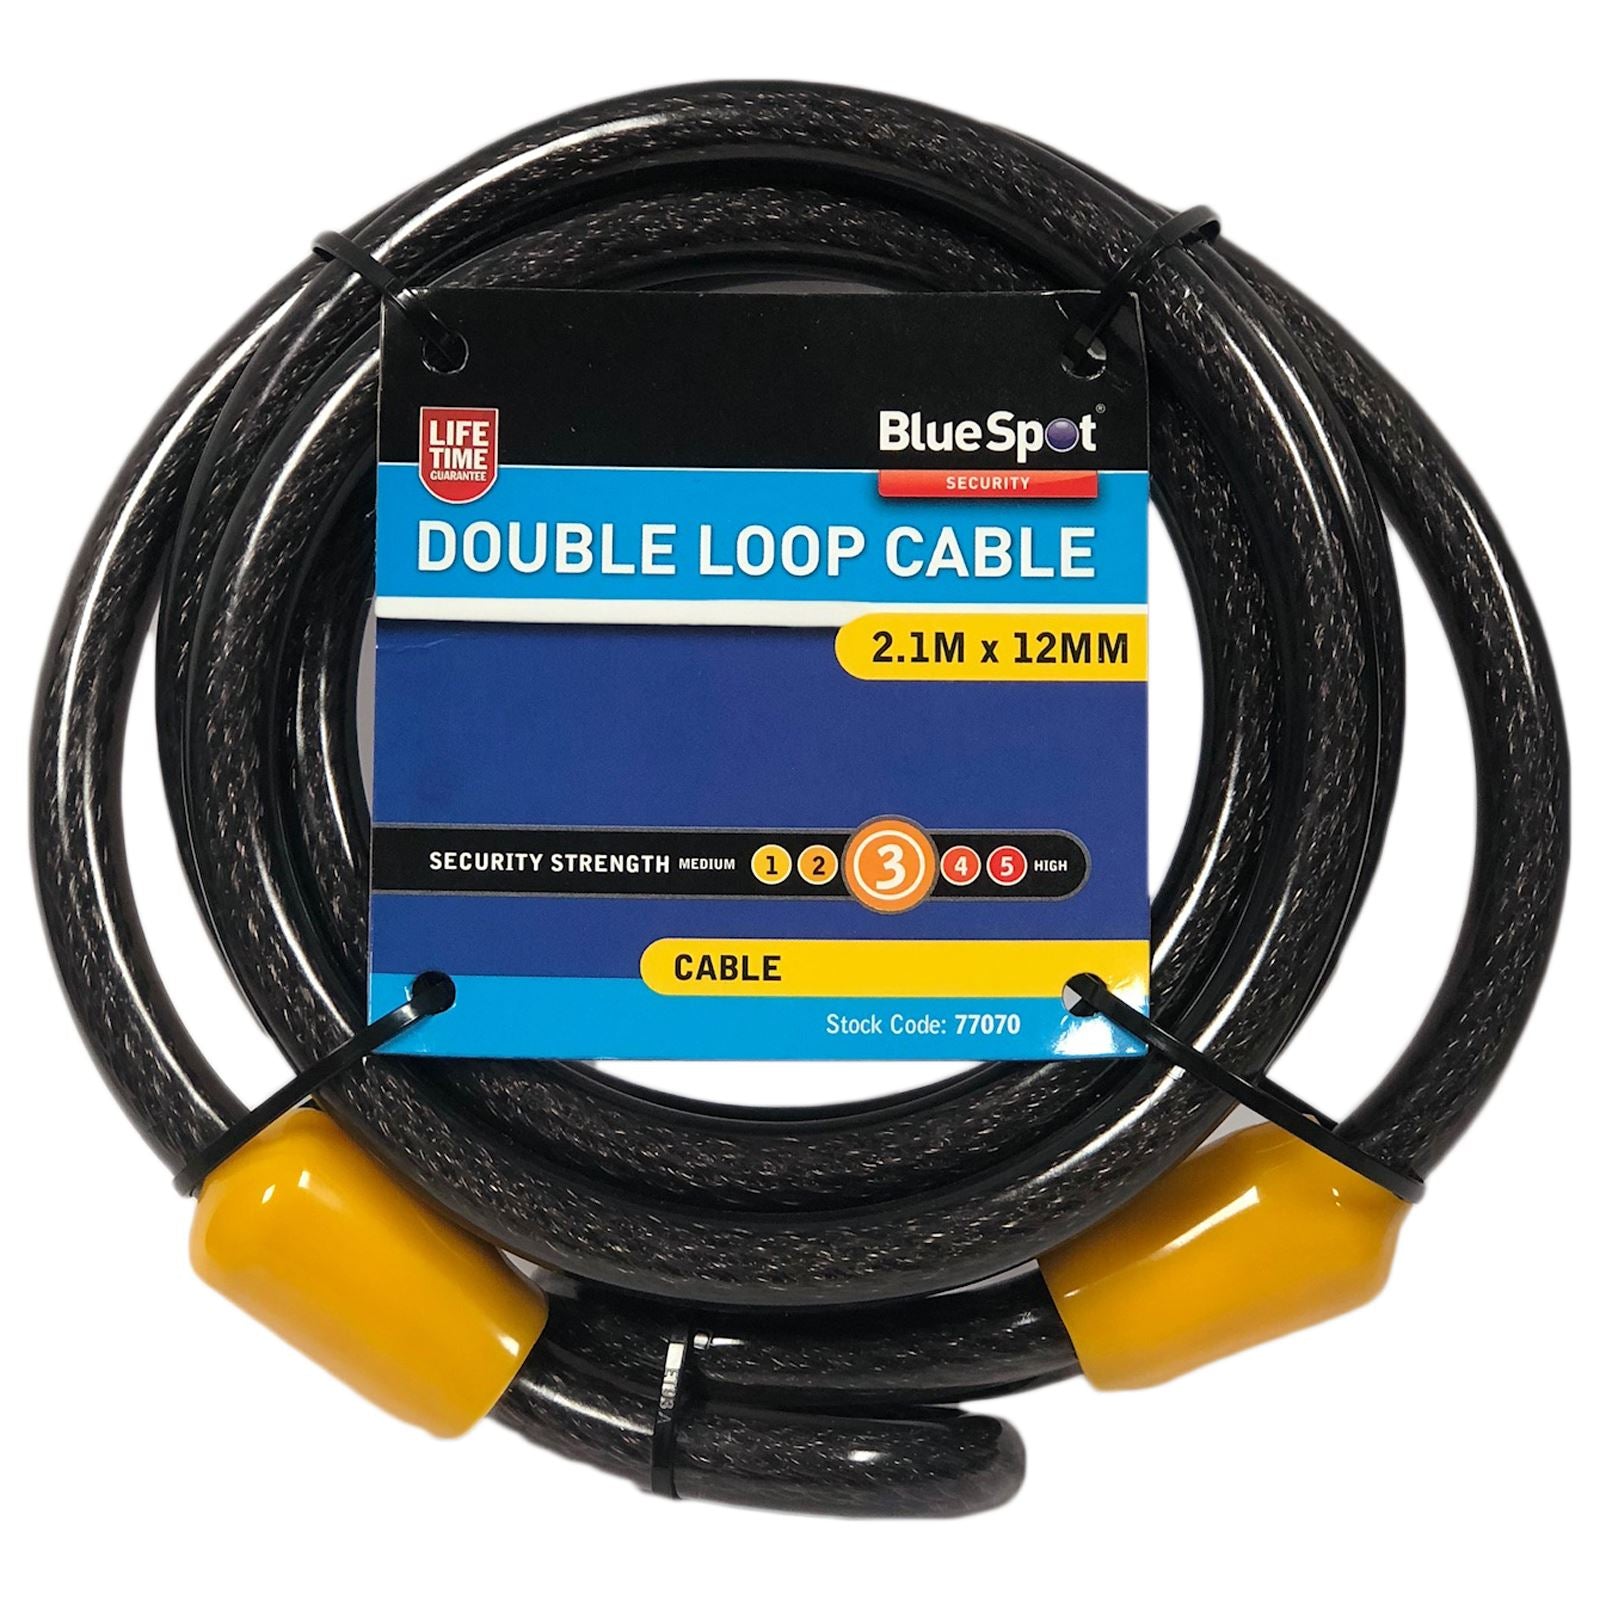 BlueSpot Cable Bike Lock Double Loop 2.1m x 12mm